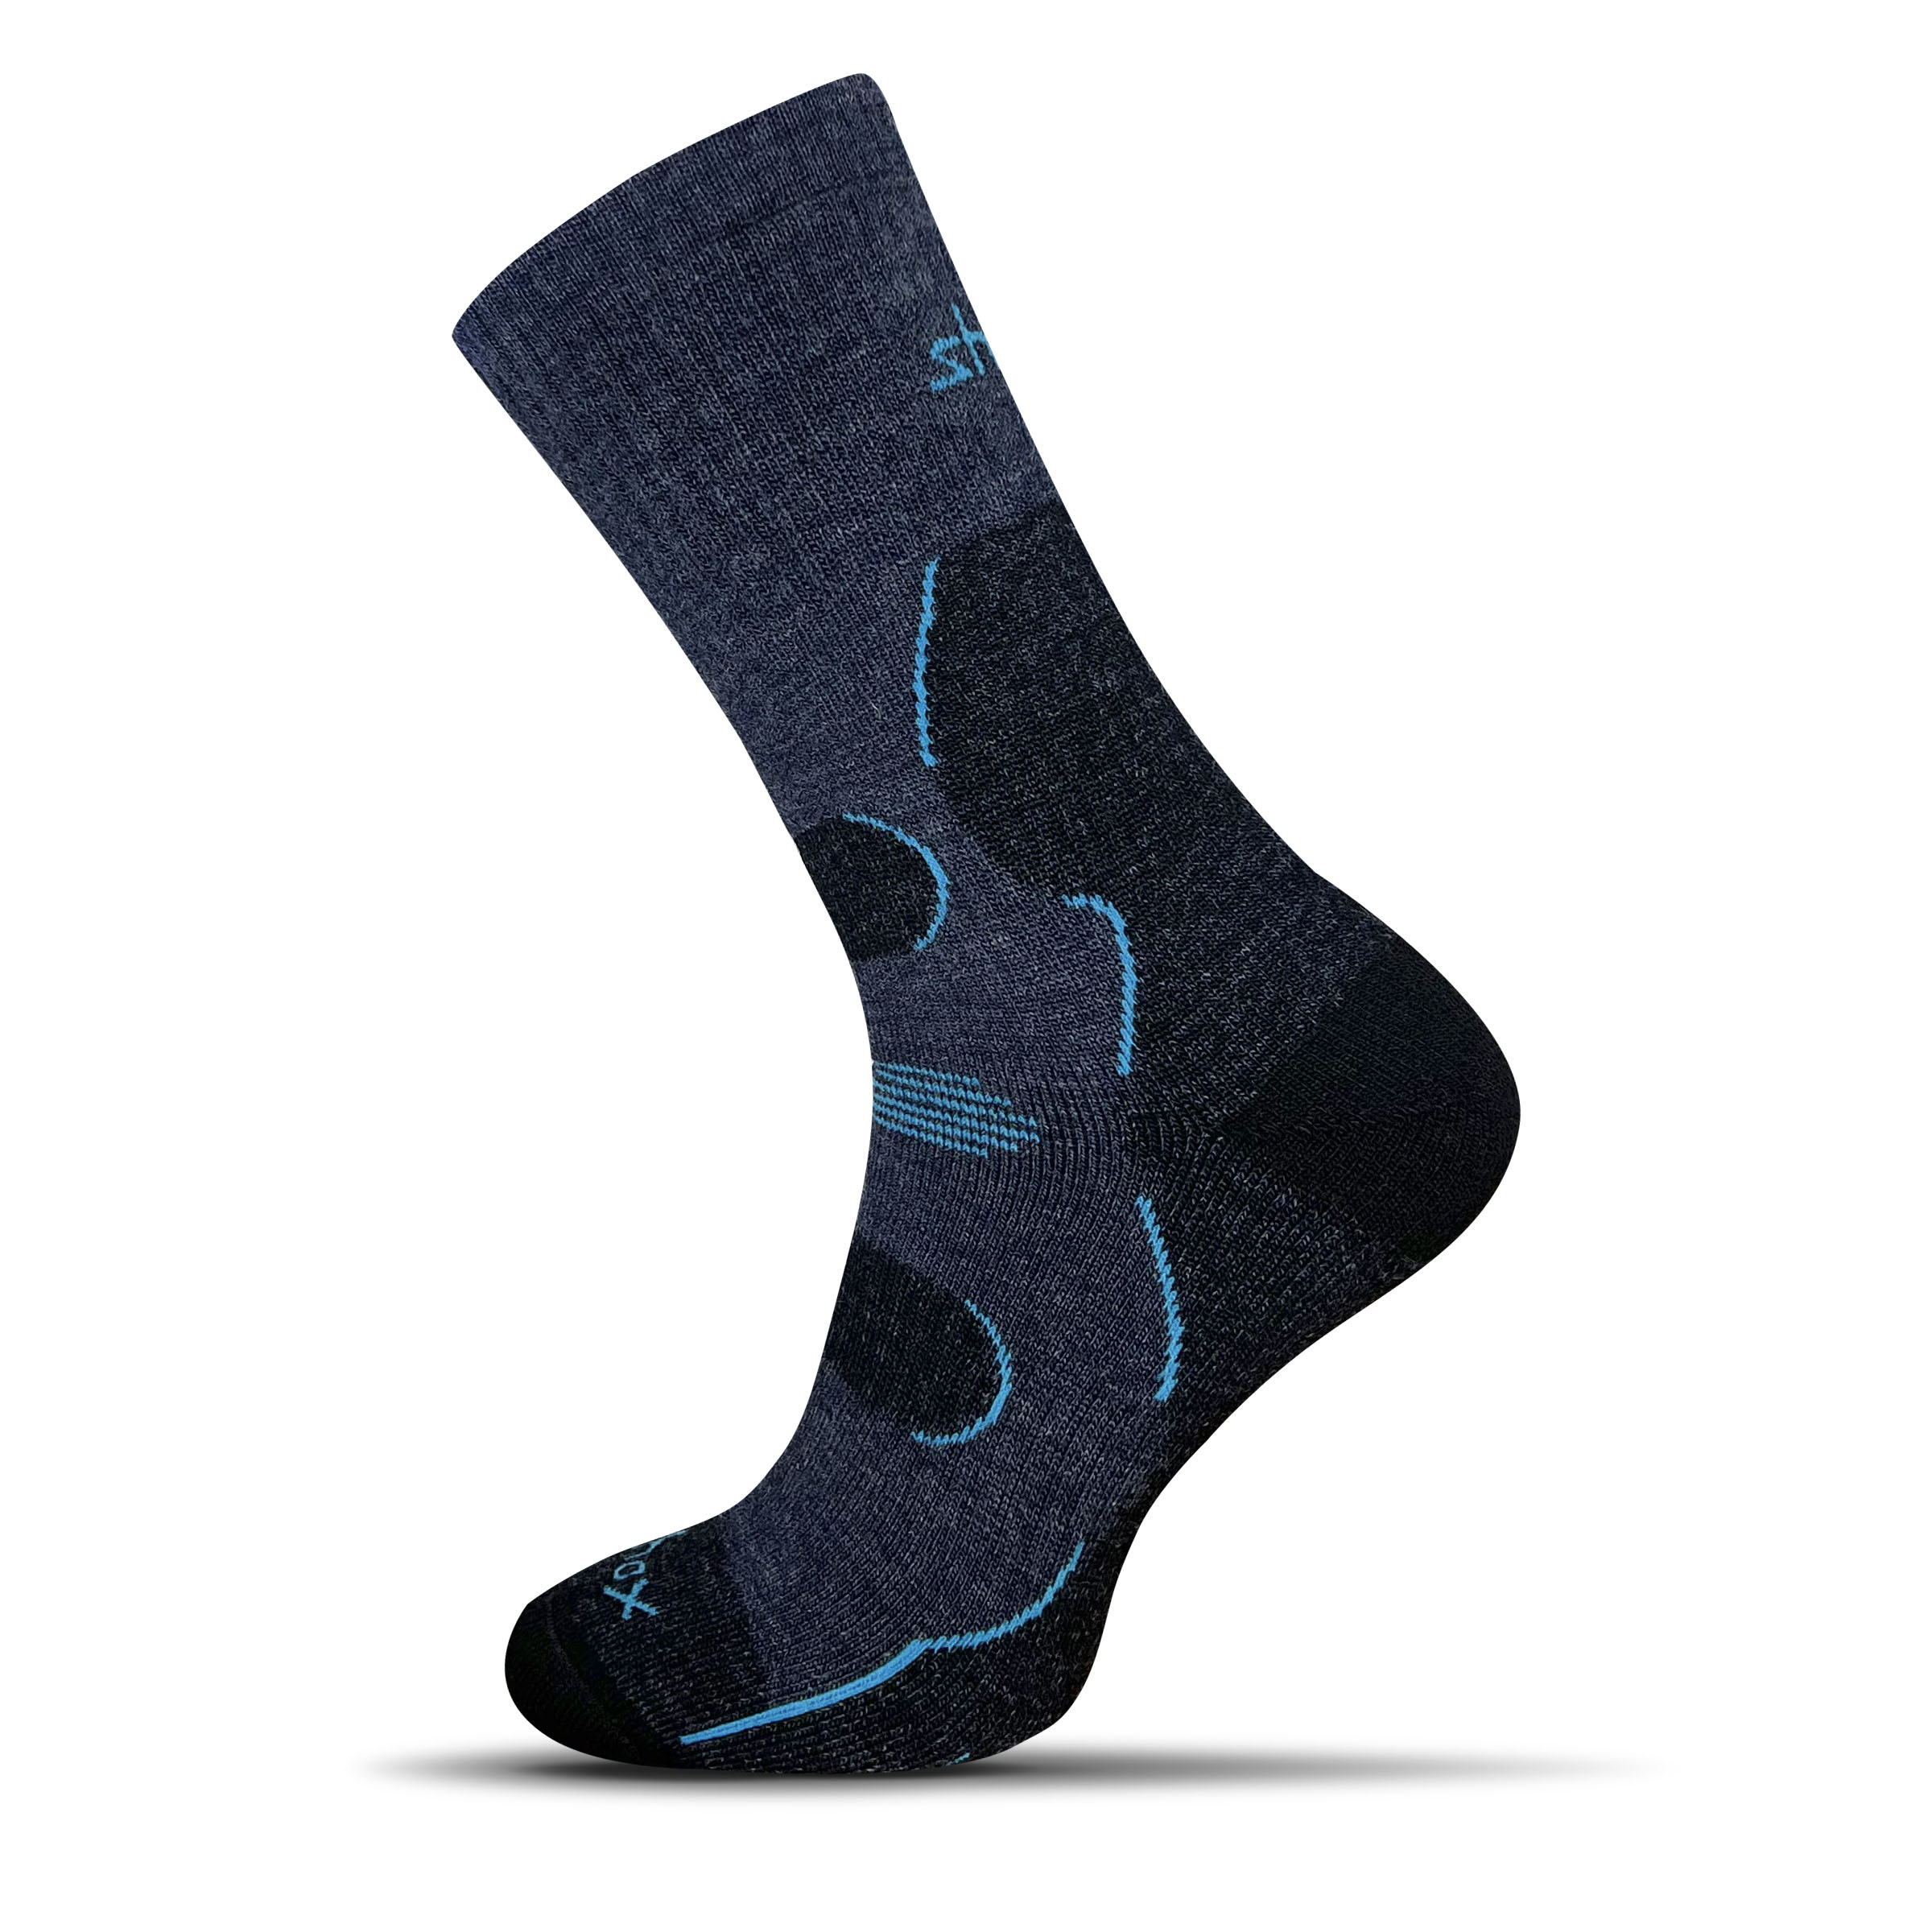 Merino Extreme ponožky - tmavo modrá, S (38-40)